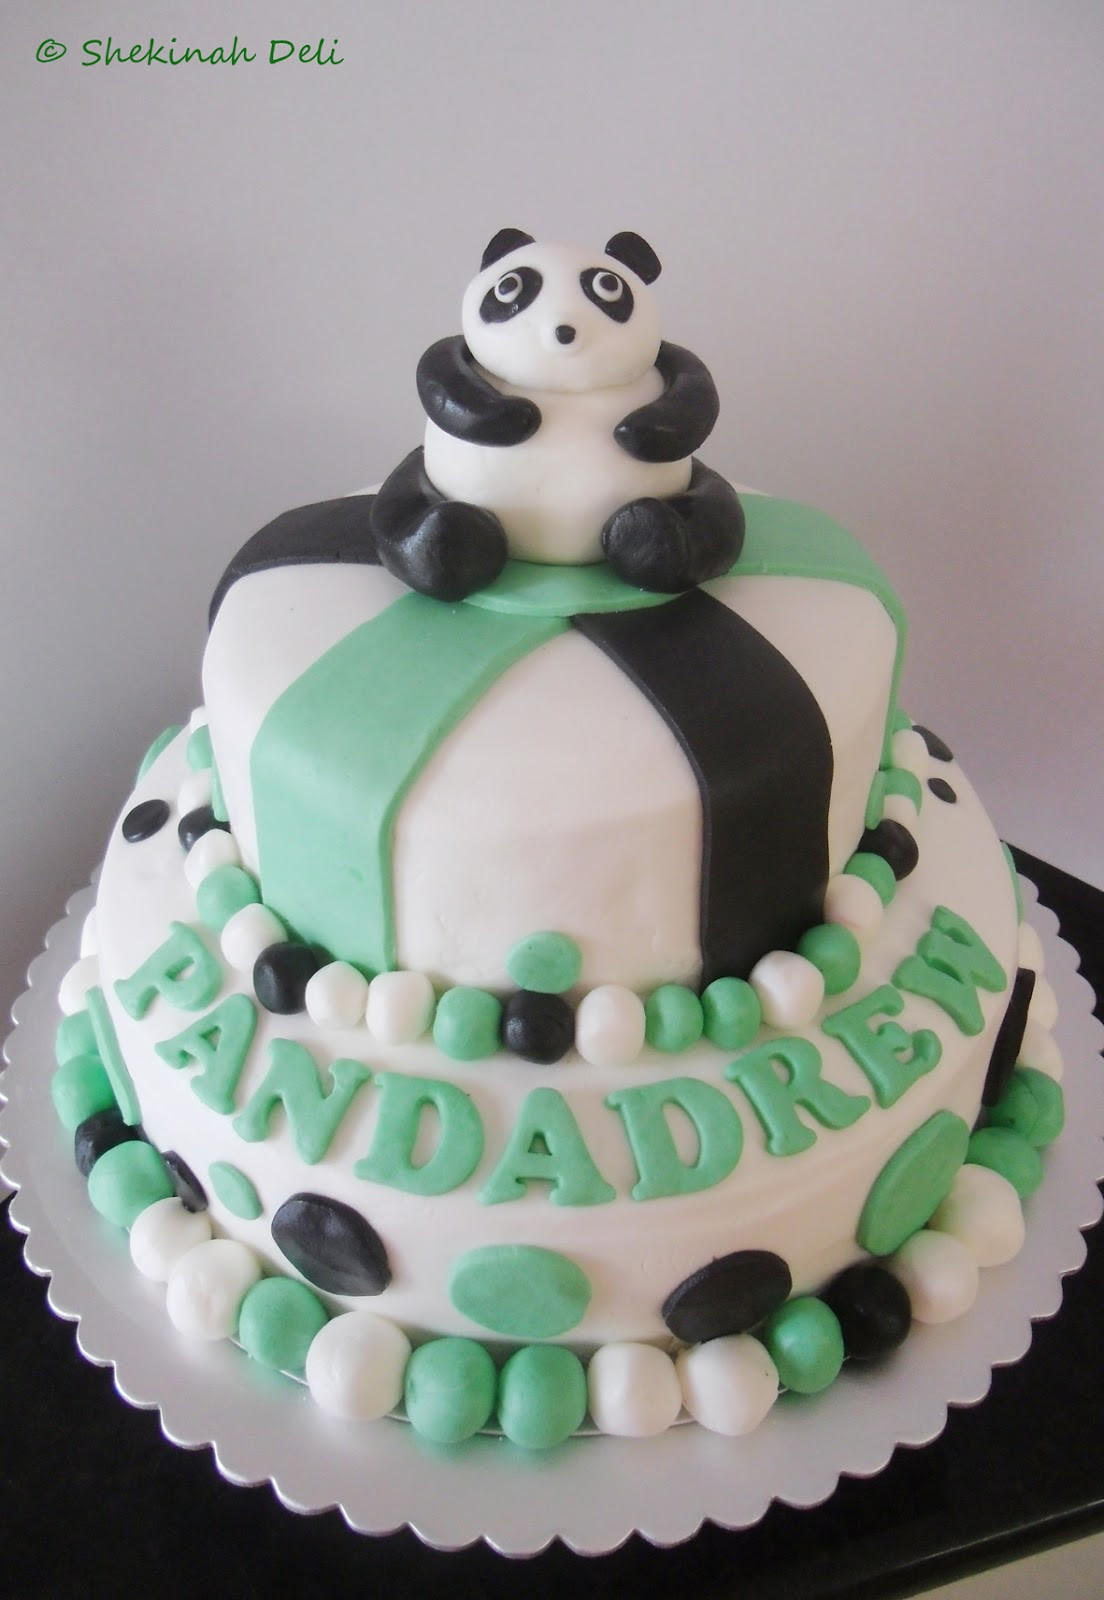 Panda Birthday Cake
 Shekinah Deli Panda cake for Andrew